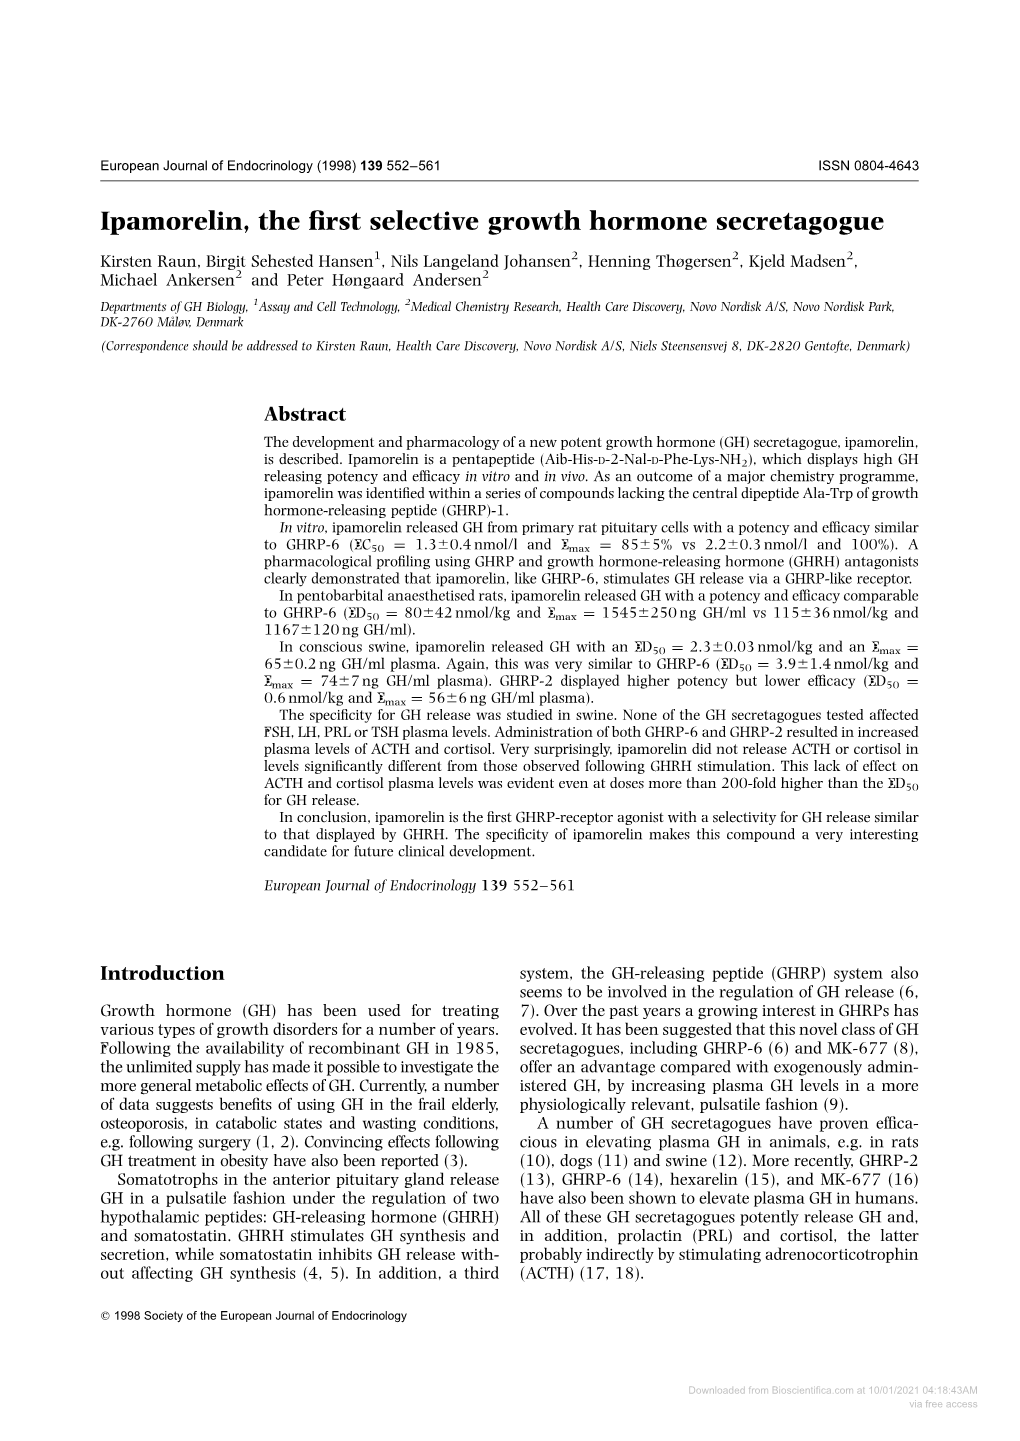 Ipamorelin, the First Selective Growth Hormone Secretagogue